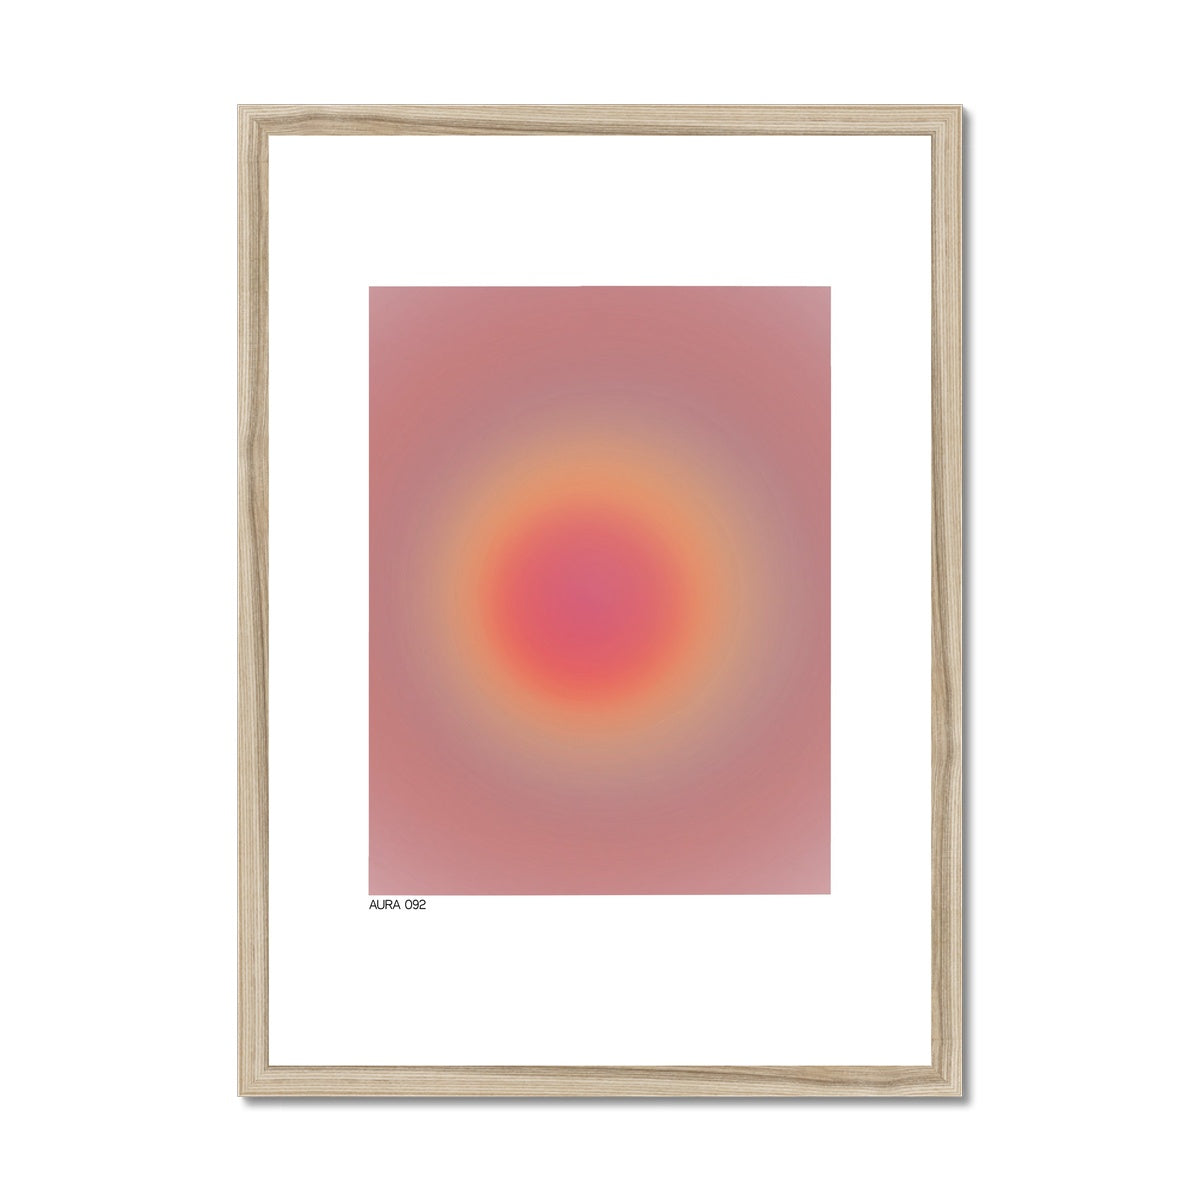 aura 092 Framed & Mounted Print